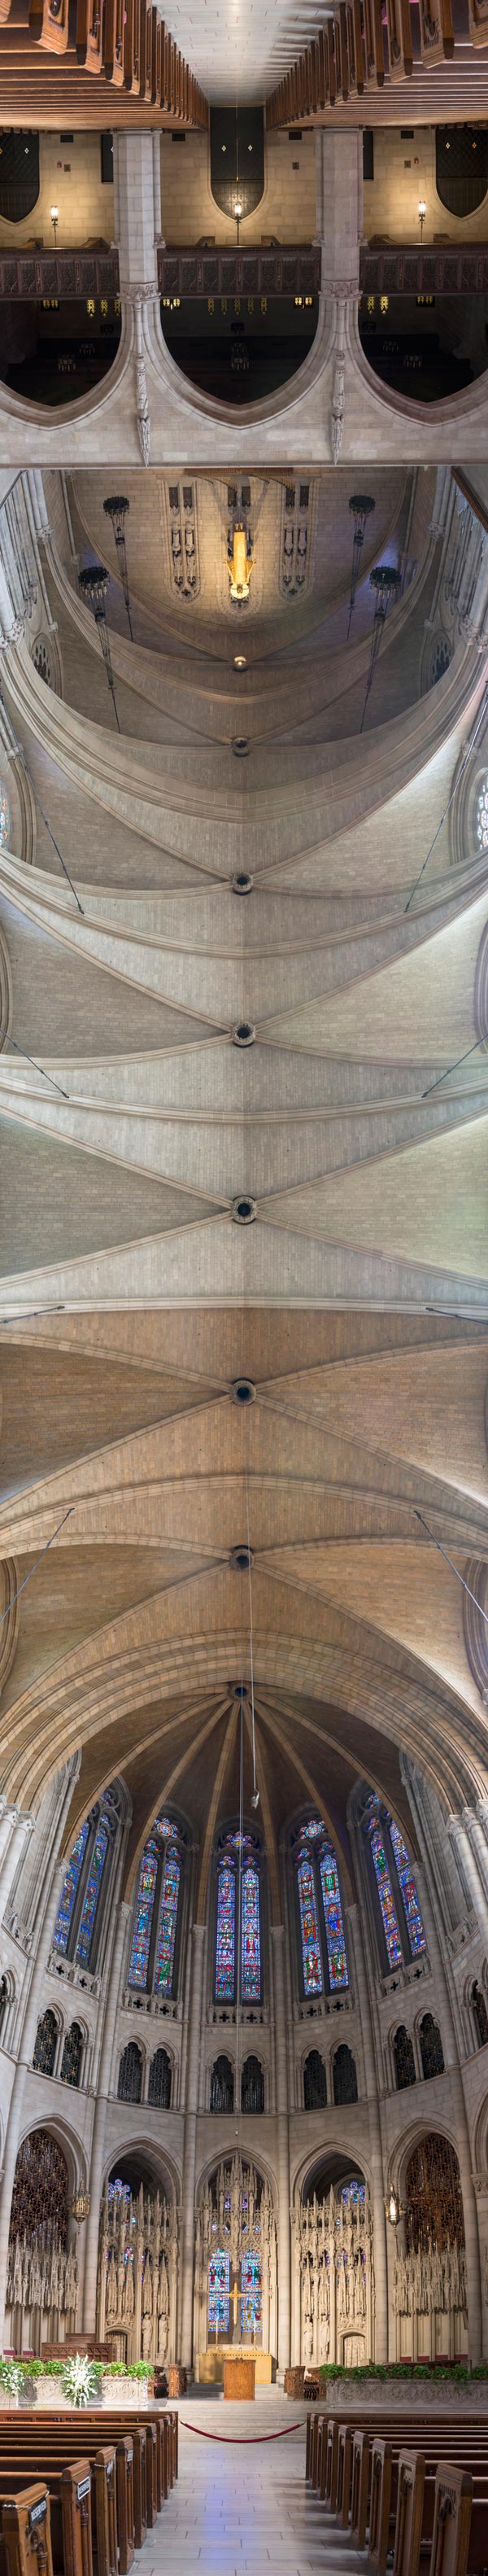 vertical panoramas of church ceilings 4 Amazing Vertical Panoramas of Church Ceilings